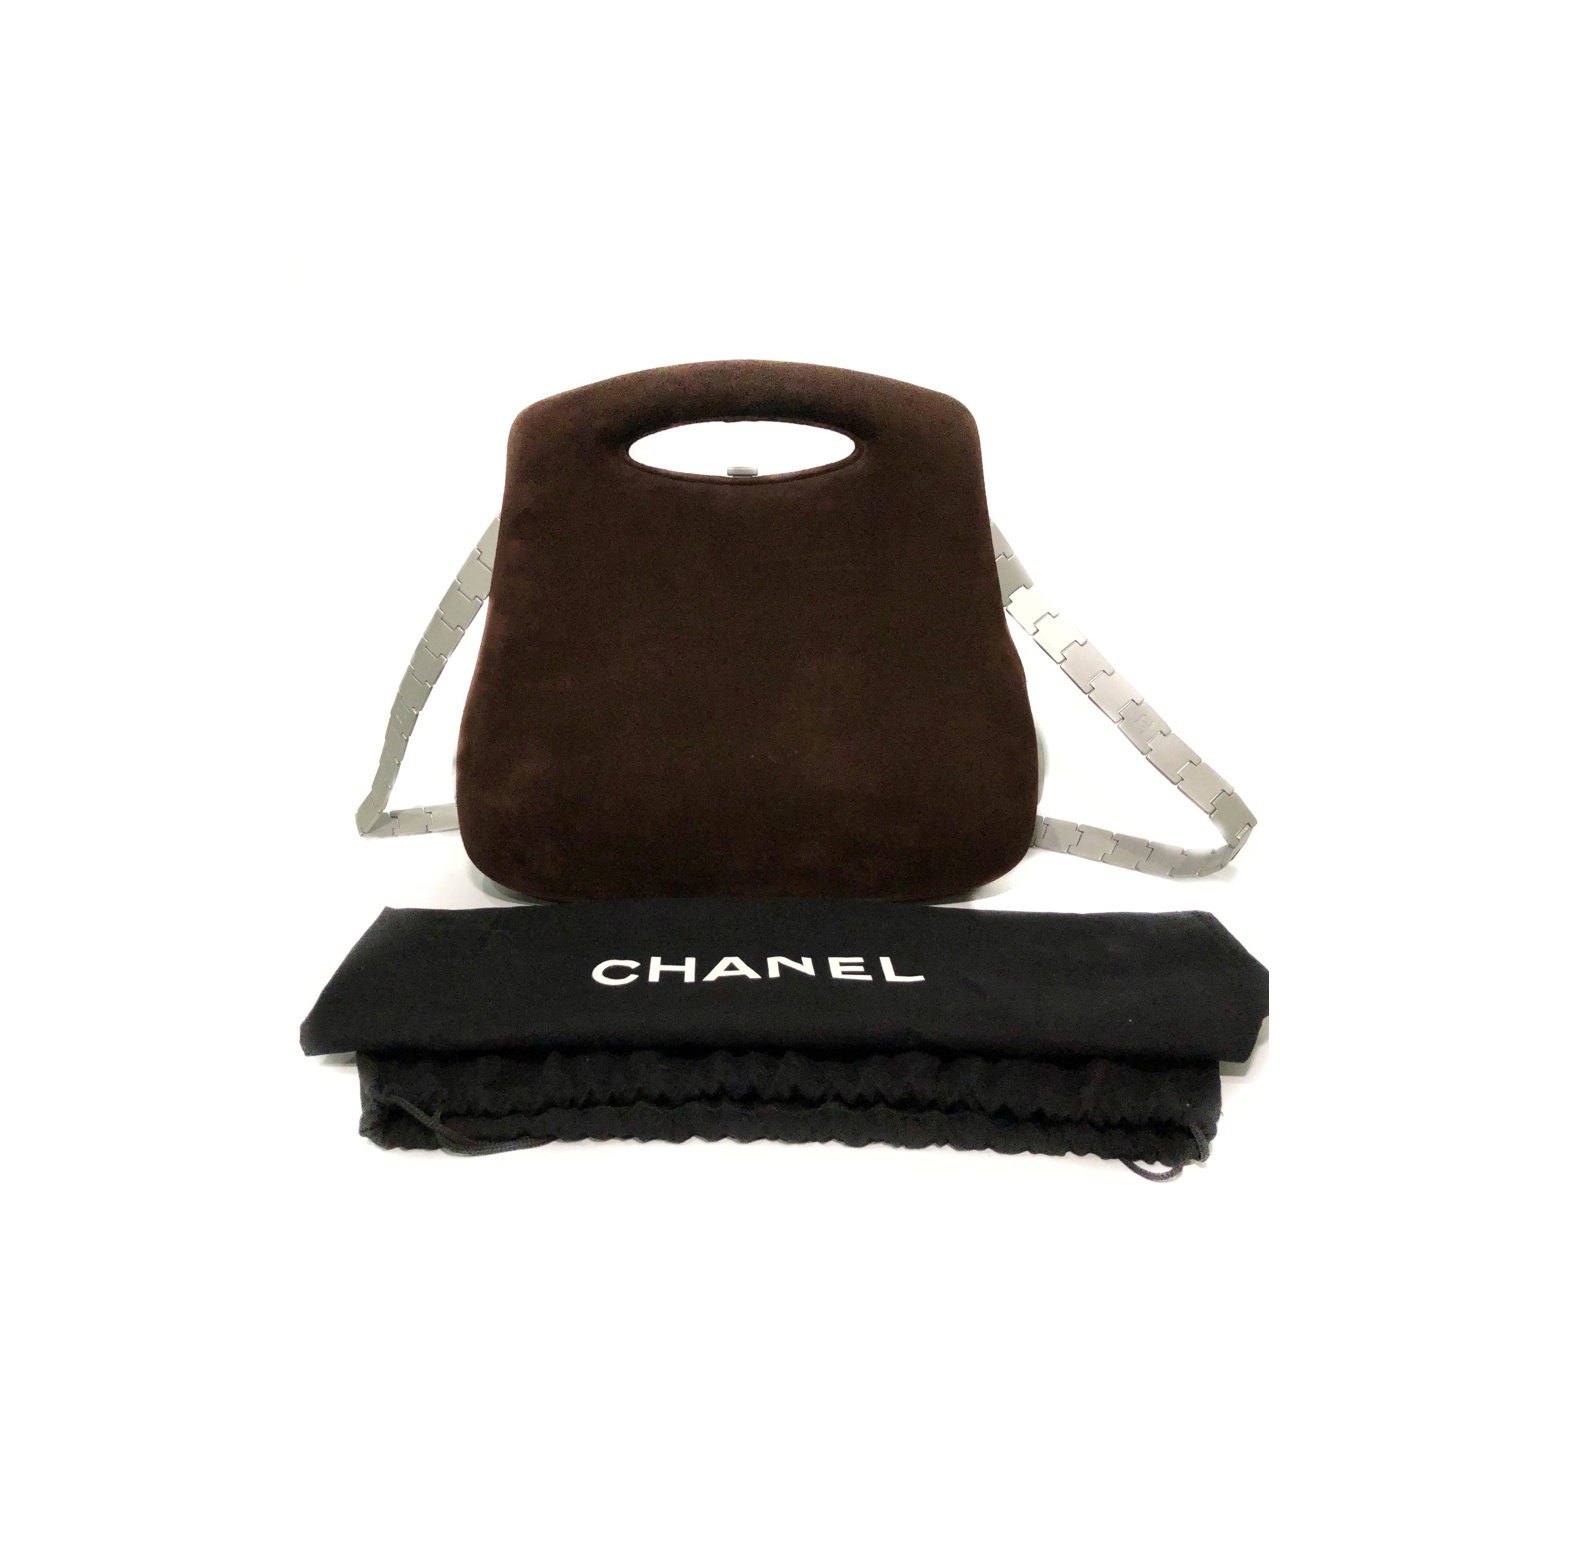 Sold at Auction: Chanel Black Futuristic Millennium Hard Case Bag